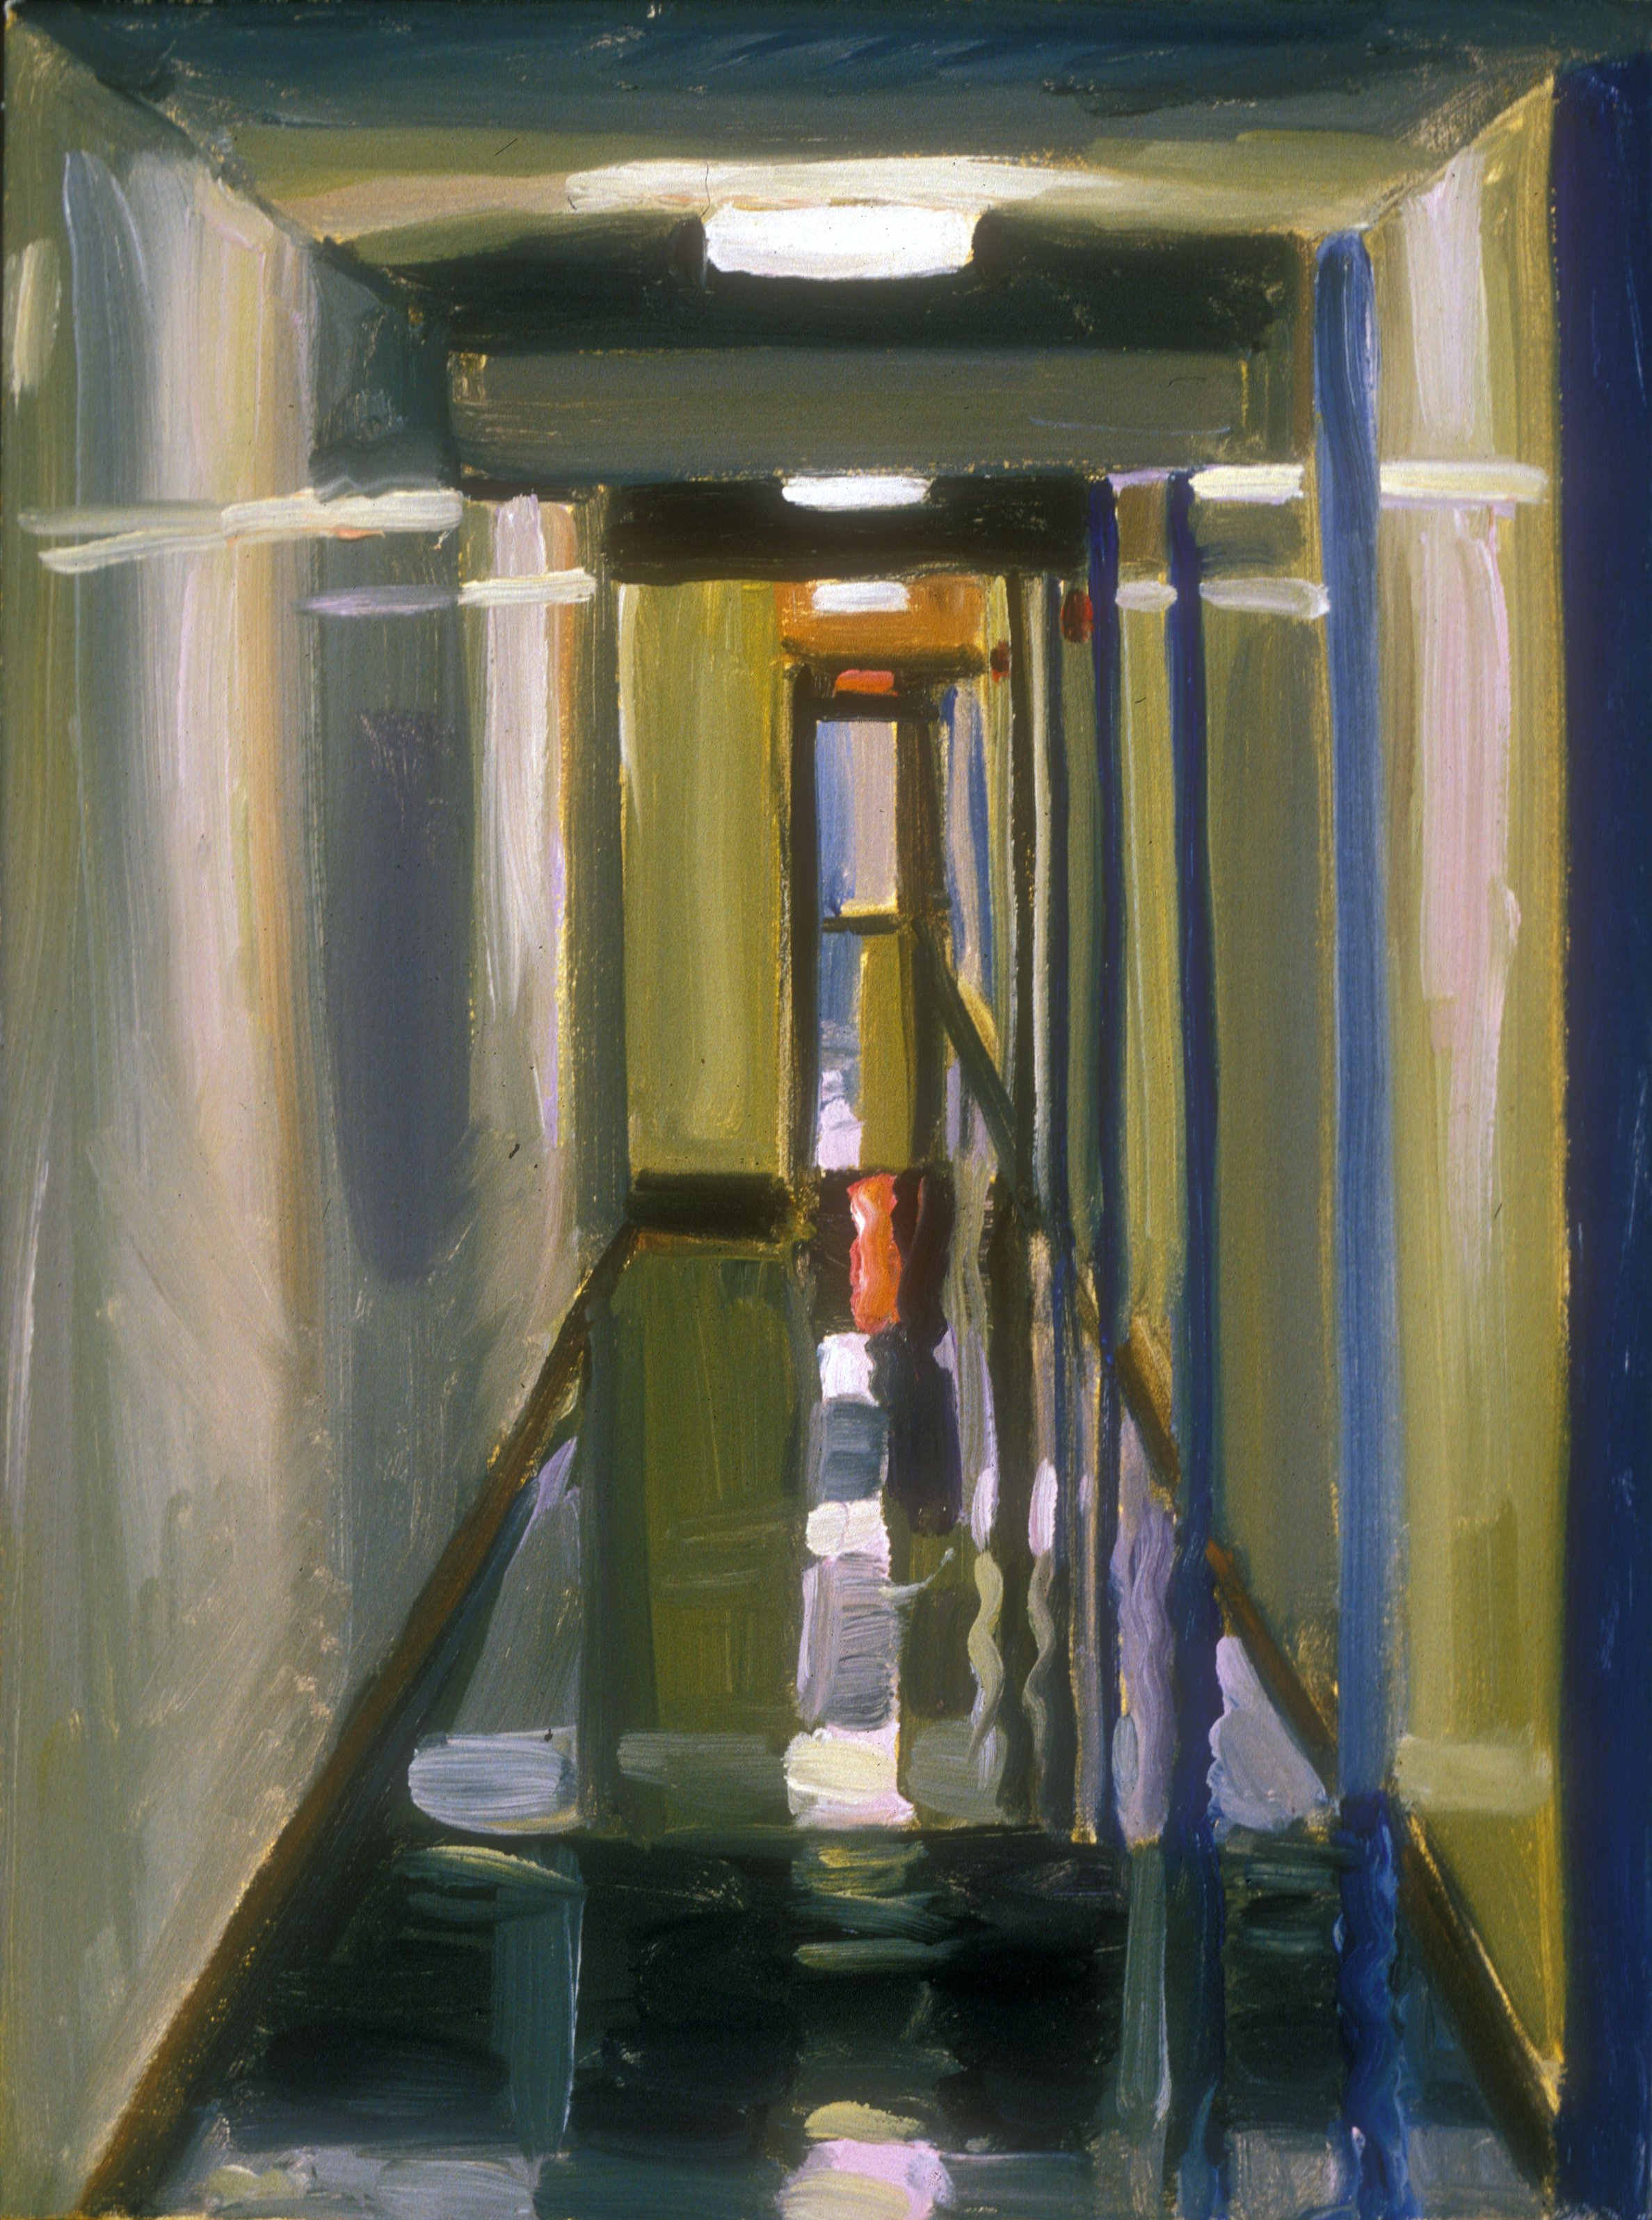  Hallway  20x16”, oil on canvas, 2007   